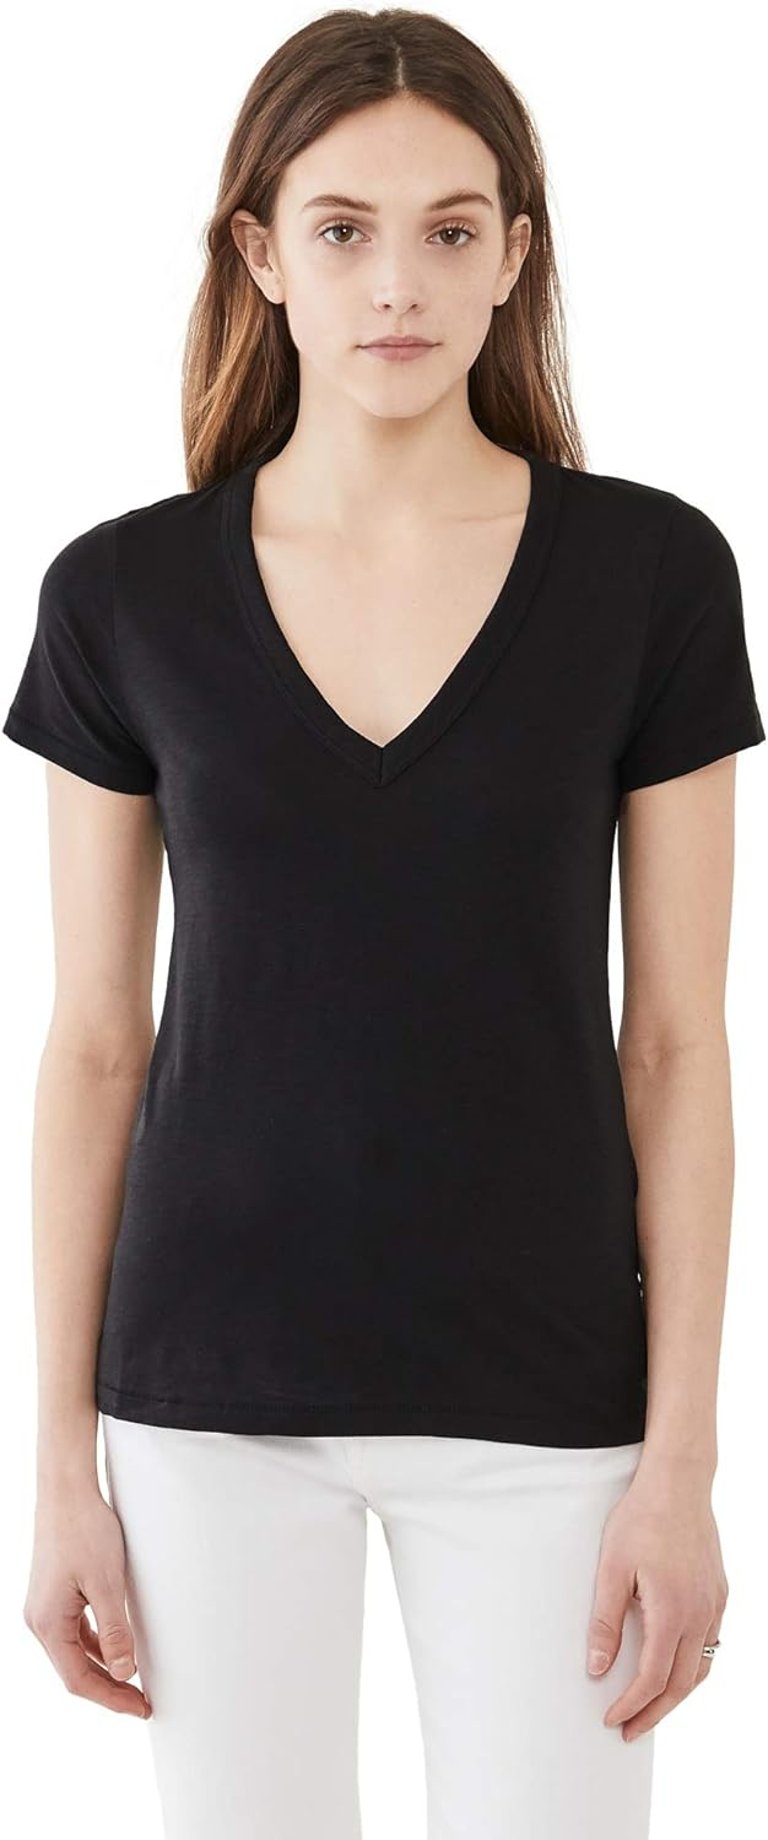 Women The Vee Tee Black Short Sleeve Cotton T-Shirt